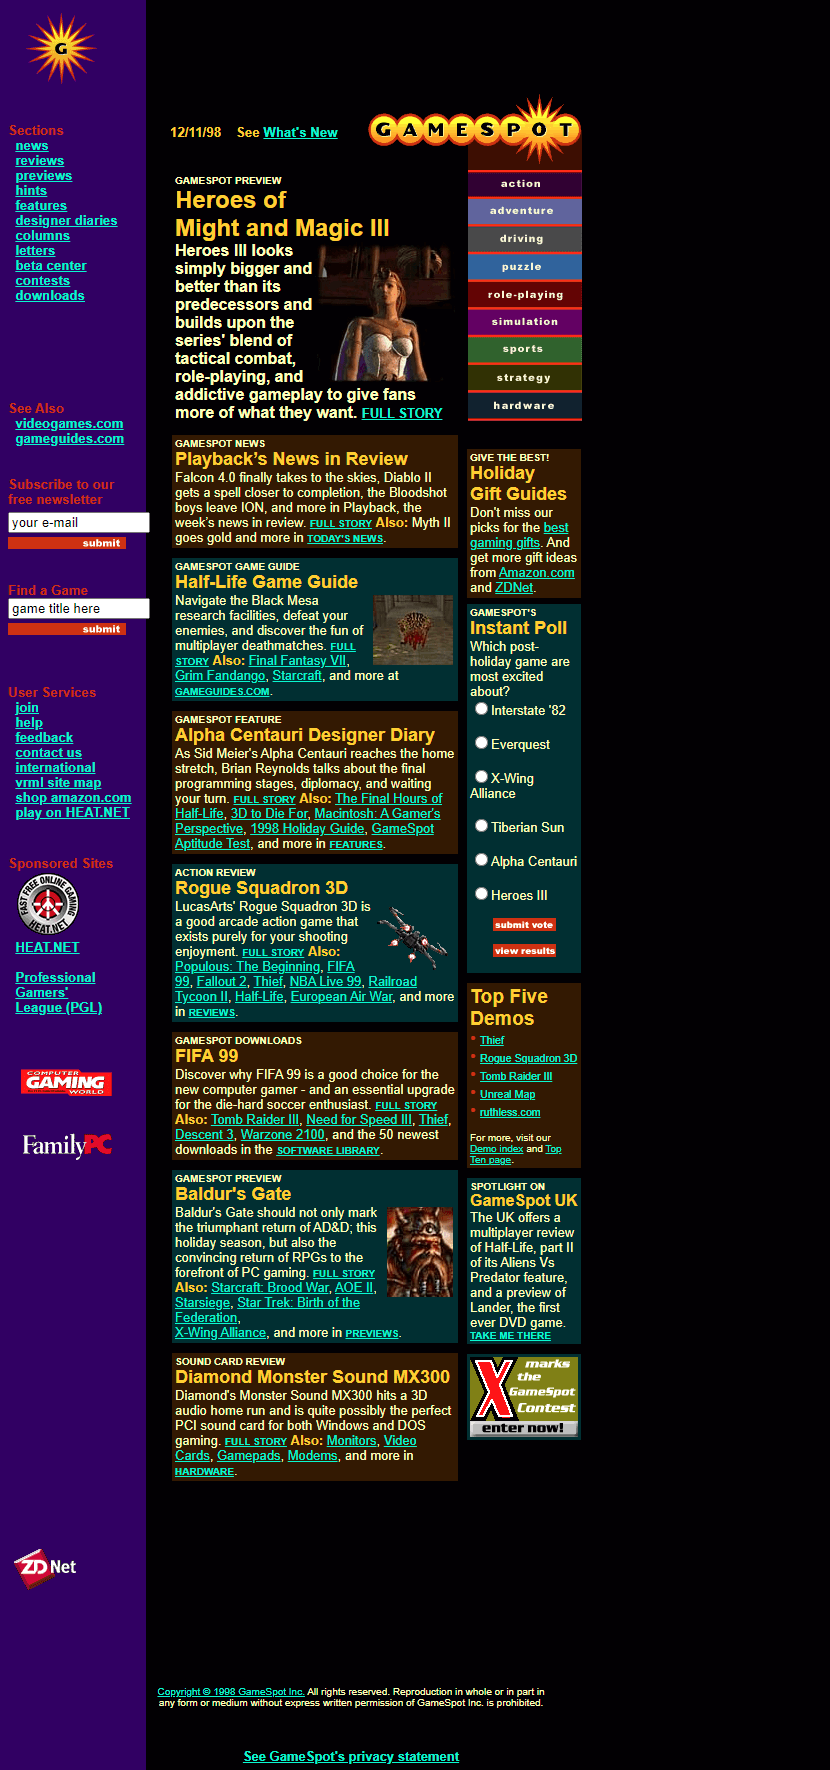 GameSpot in 1998